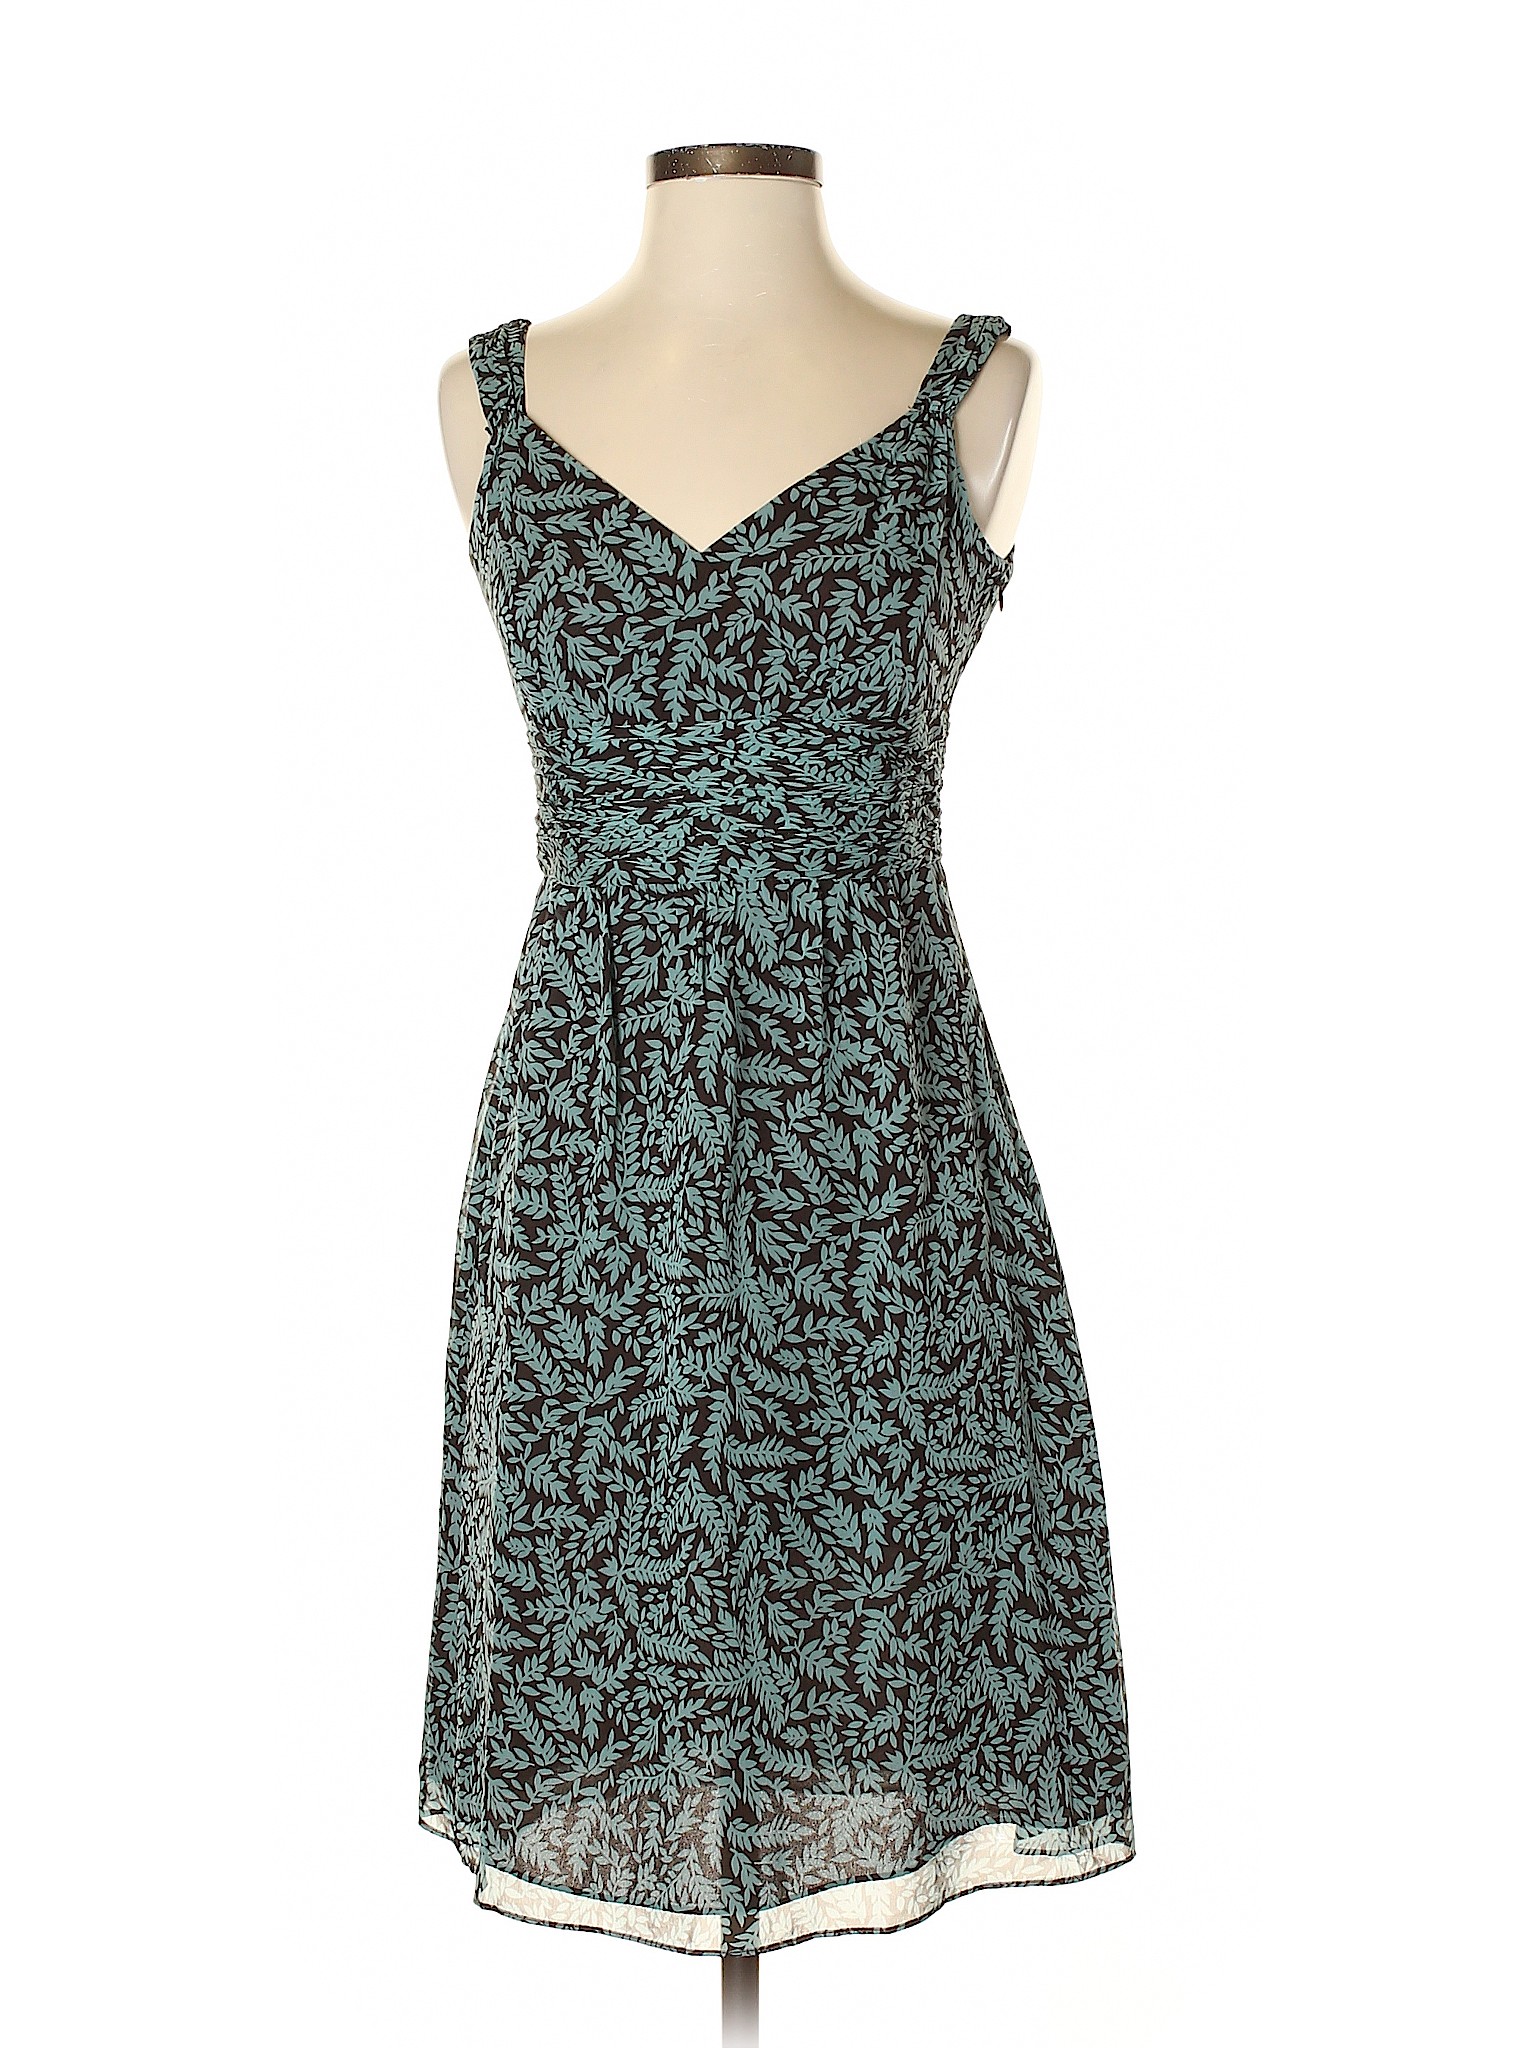 Ann Taylor Women Green Casual Dress 0 Petites | eBay